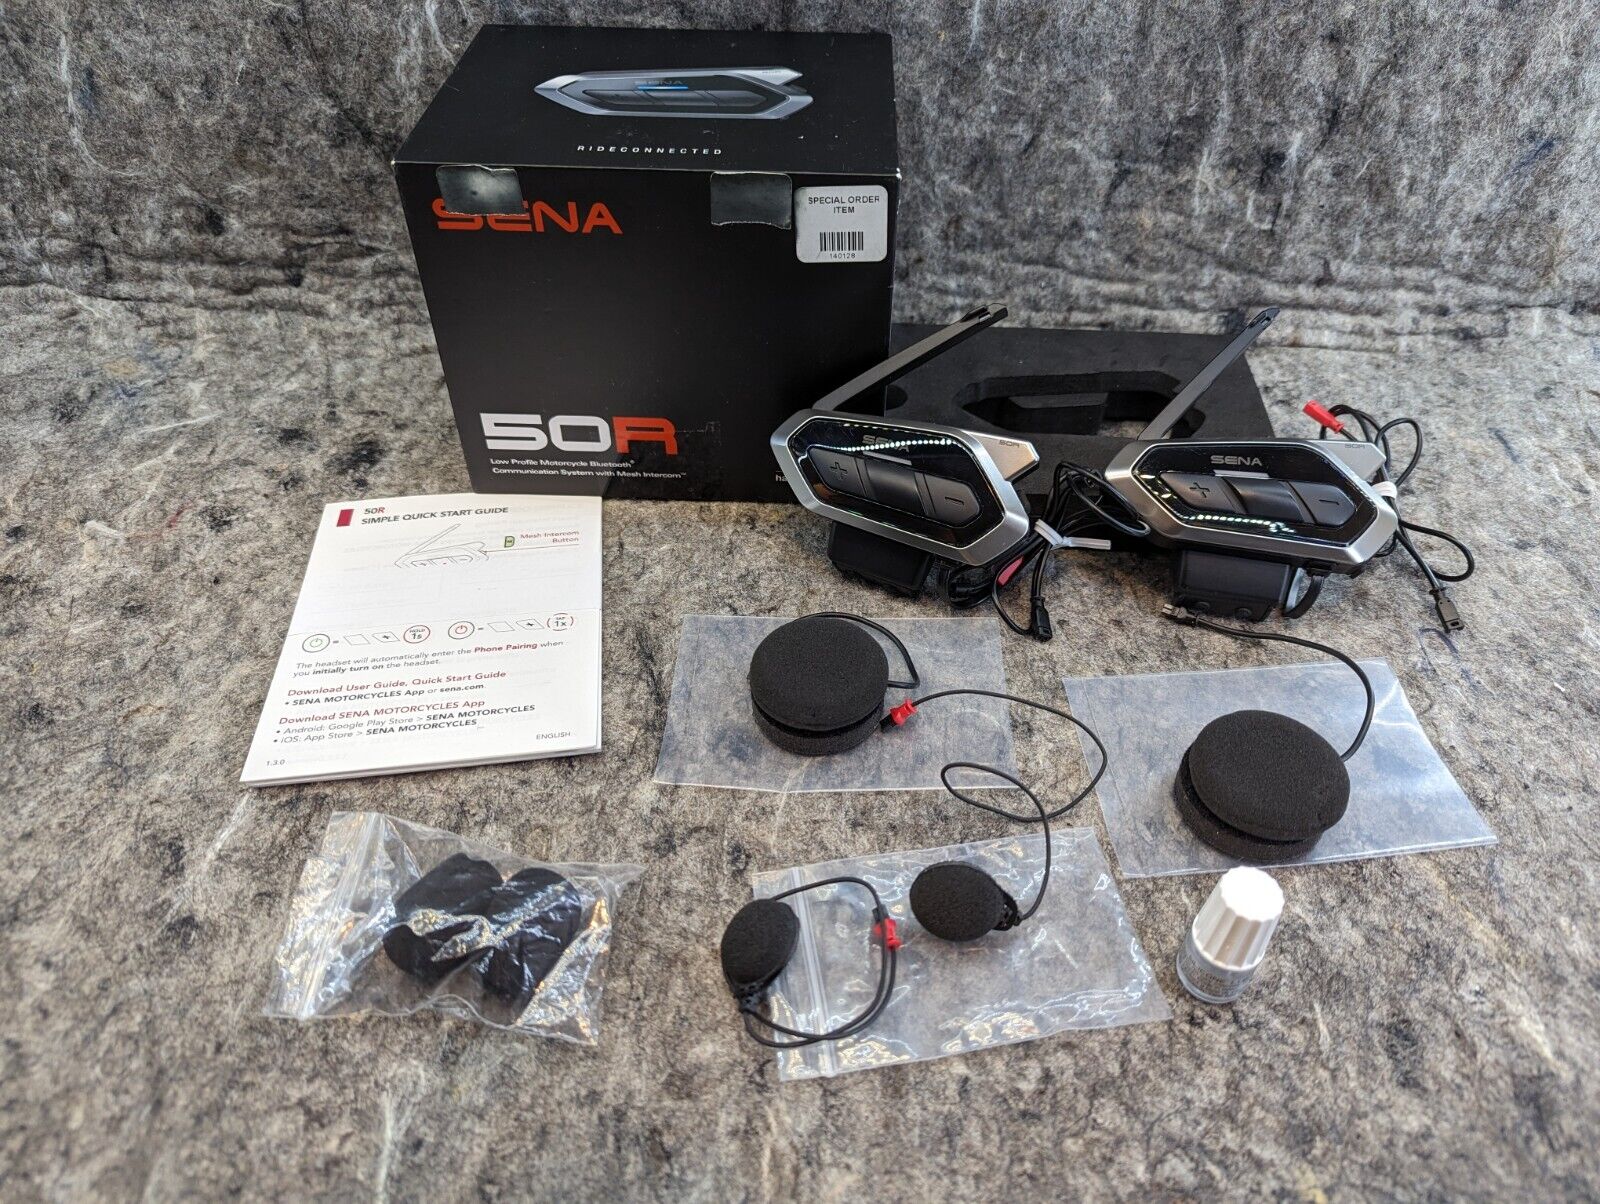 🔥Twin Pack 🔥 Sena 50R 3-button Motorcycle Bluetooth Headset, Harman Kardon 1E